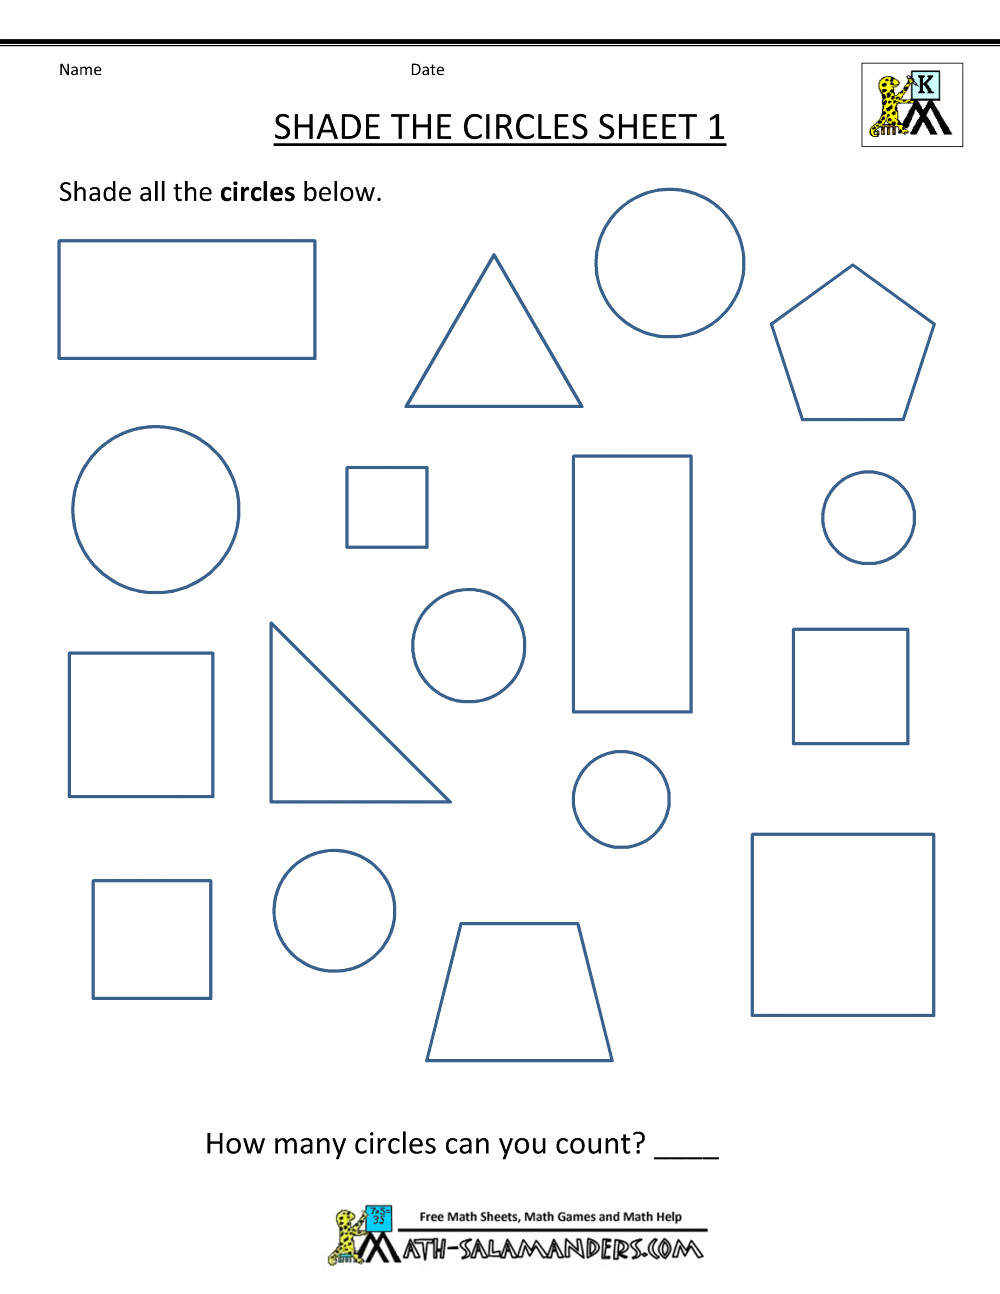 Drawing 2 Dimensional Shapes 2d Shapes Worksheets